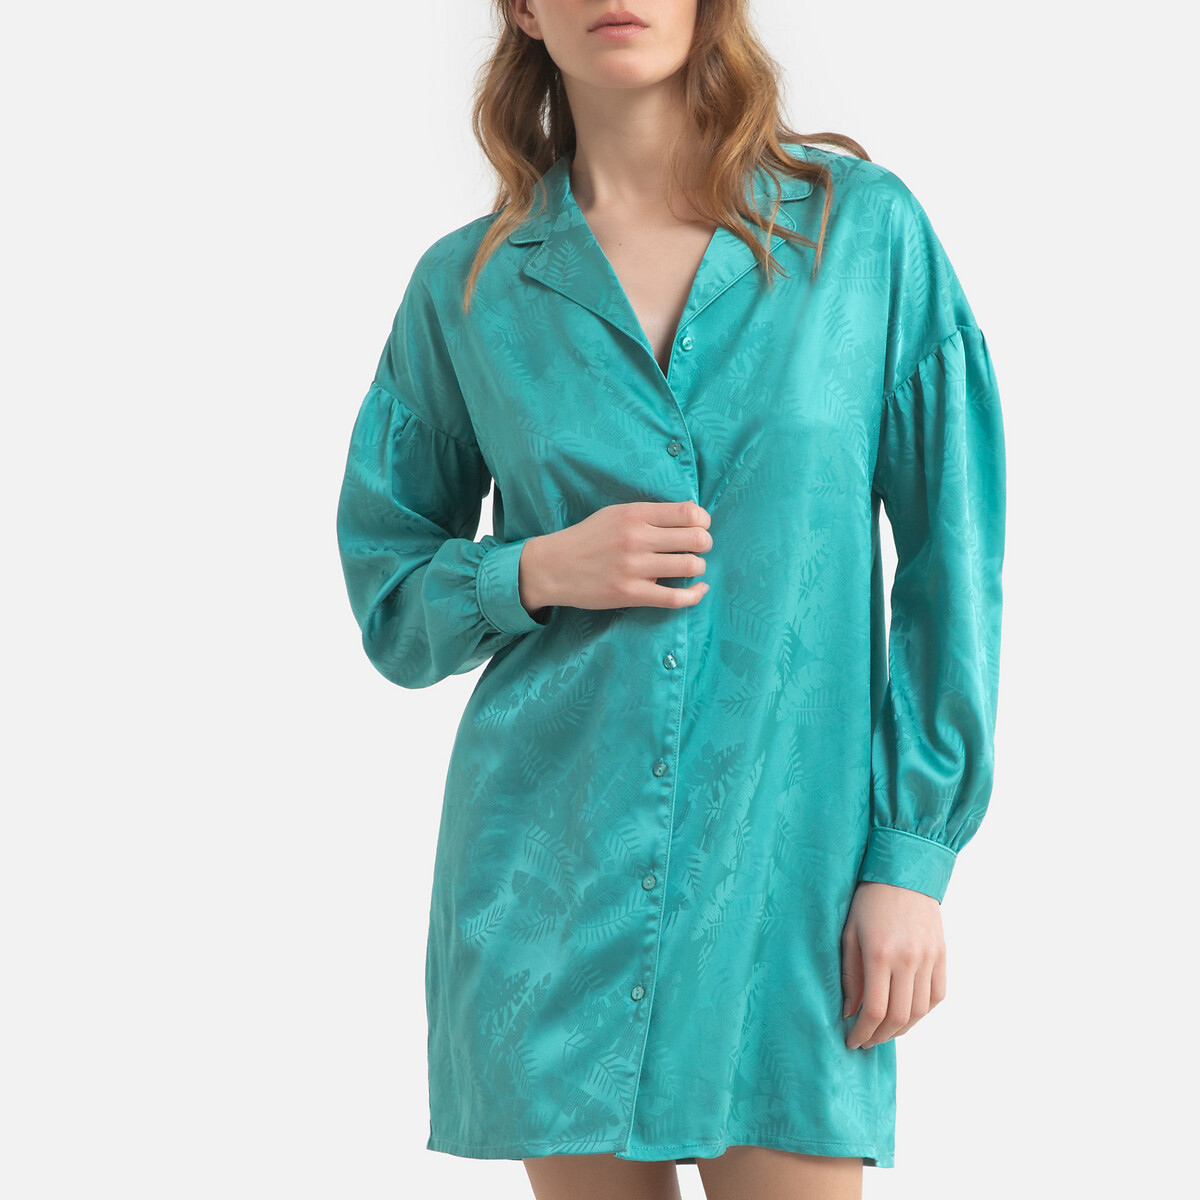 Ночная LaRedoute Рубашка в форме пижамы из сатина 40 (FR) - 46 (RUS) зеленый, размер 40 (FR) - 46 (RUS) Рубашка в форме пижамы из сатина 40 (FR) - 46 (RUS) зеленый - фото 1